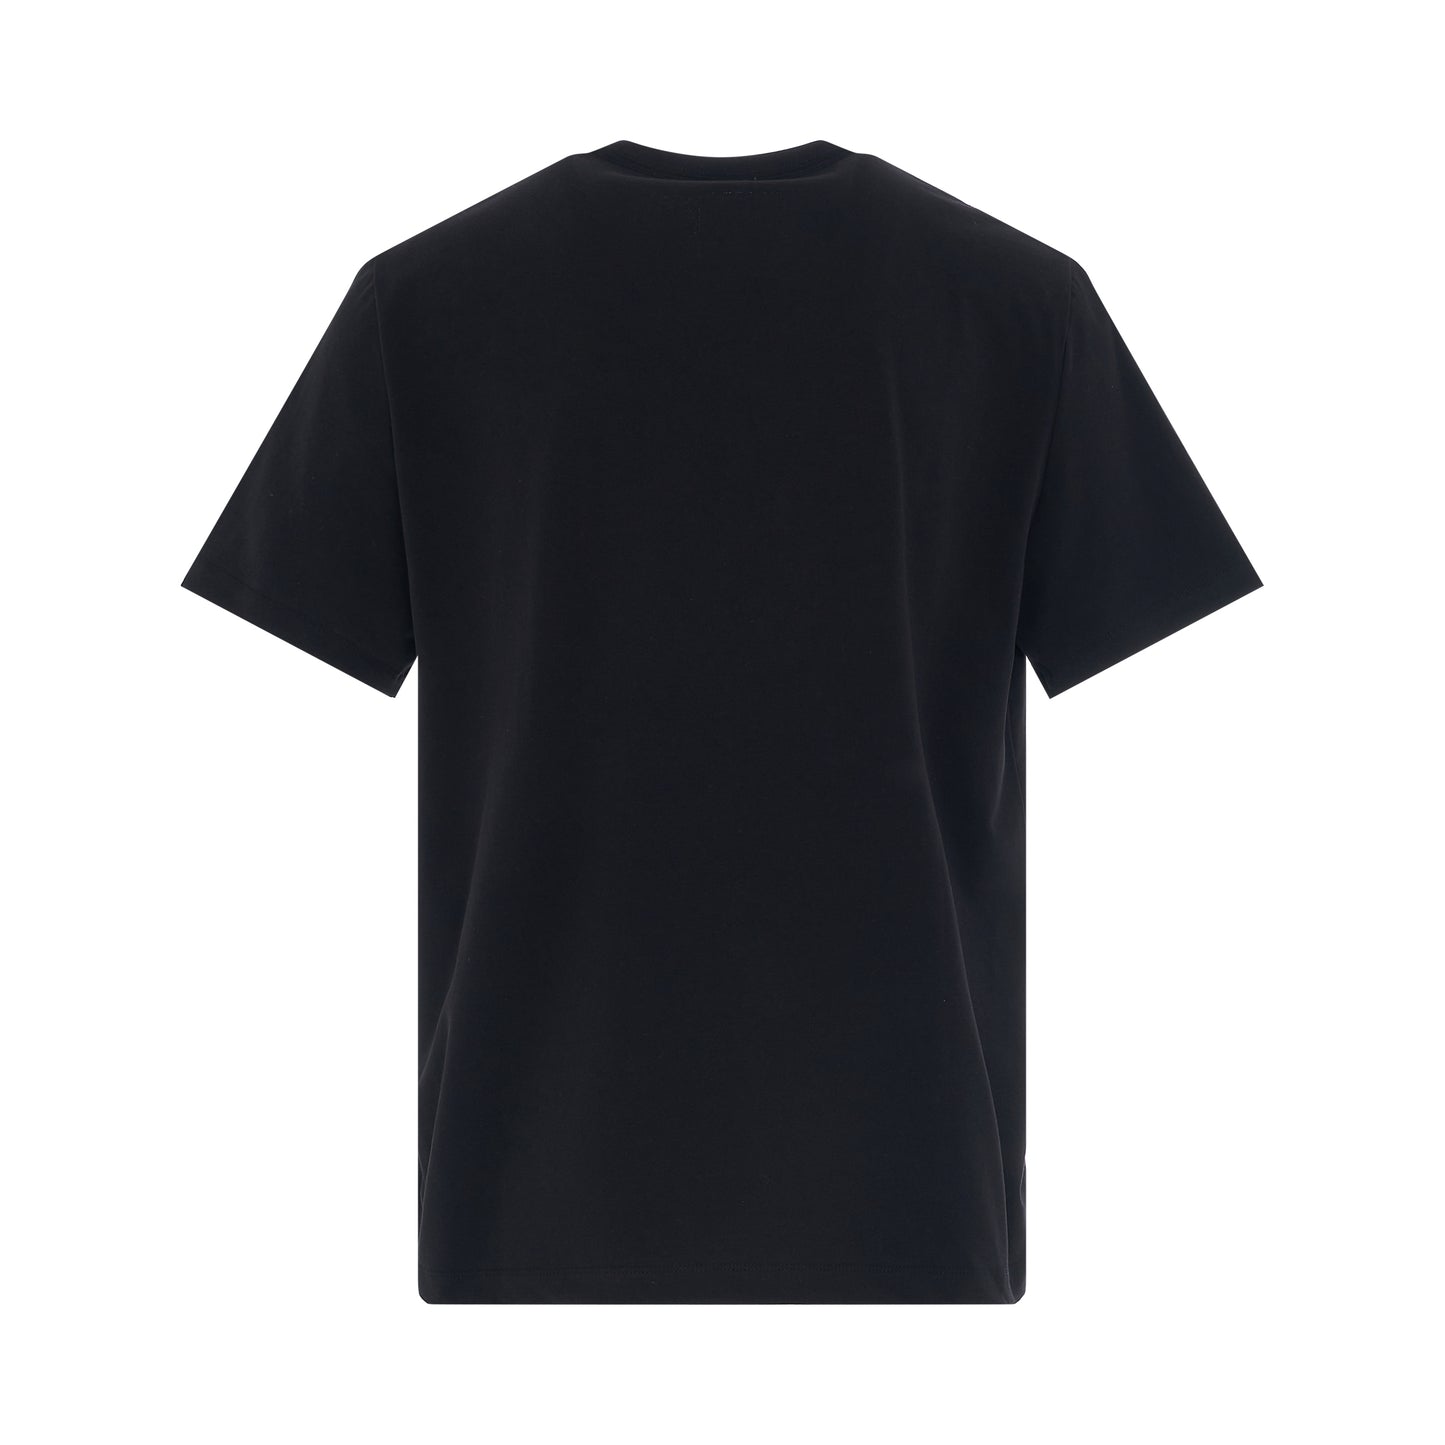 Photo Stitch T-Shirt in Black